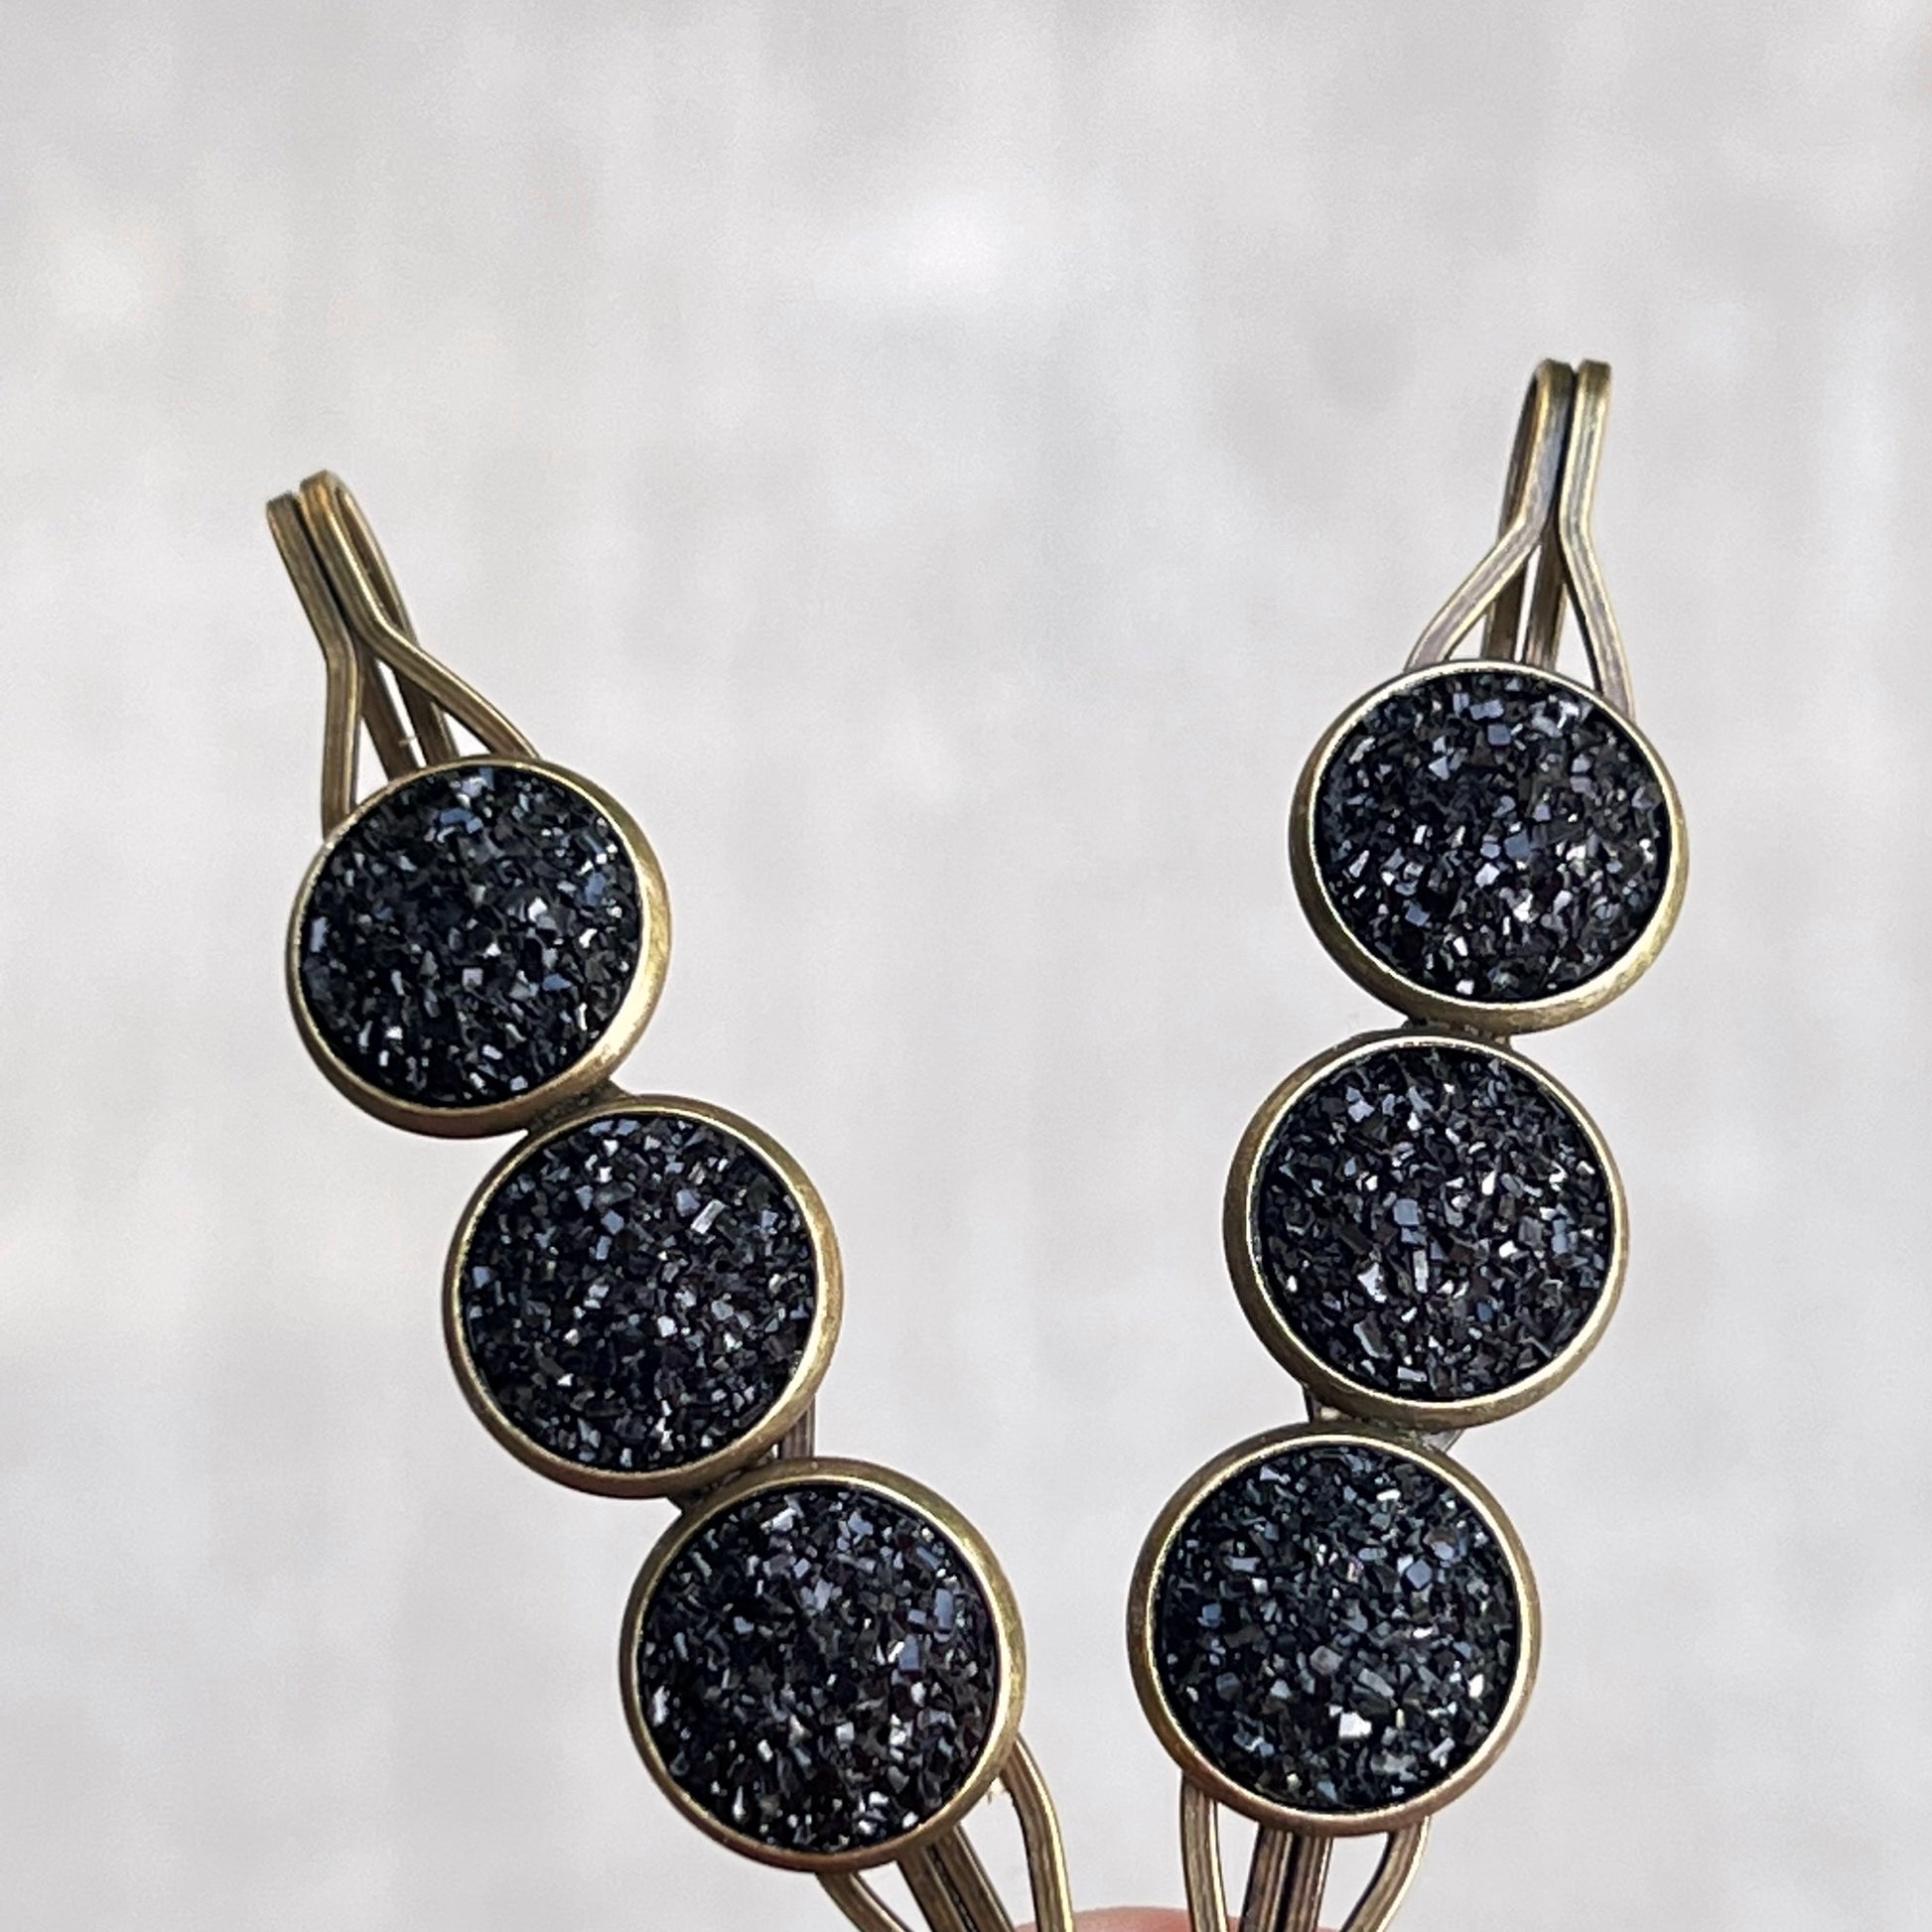 Black Druzy Hair Pins - Chic Women's Hair Accessories - Cute Bobby Pins for Stylish Looks